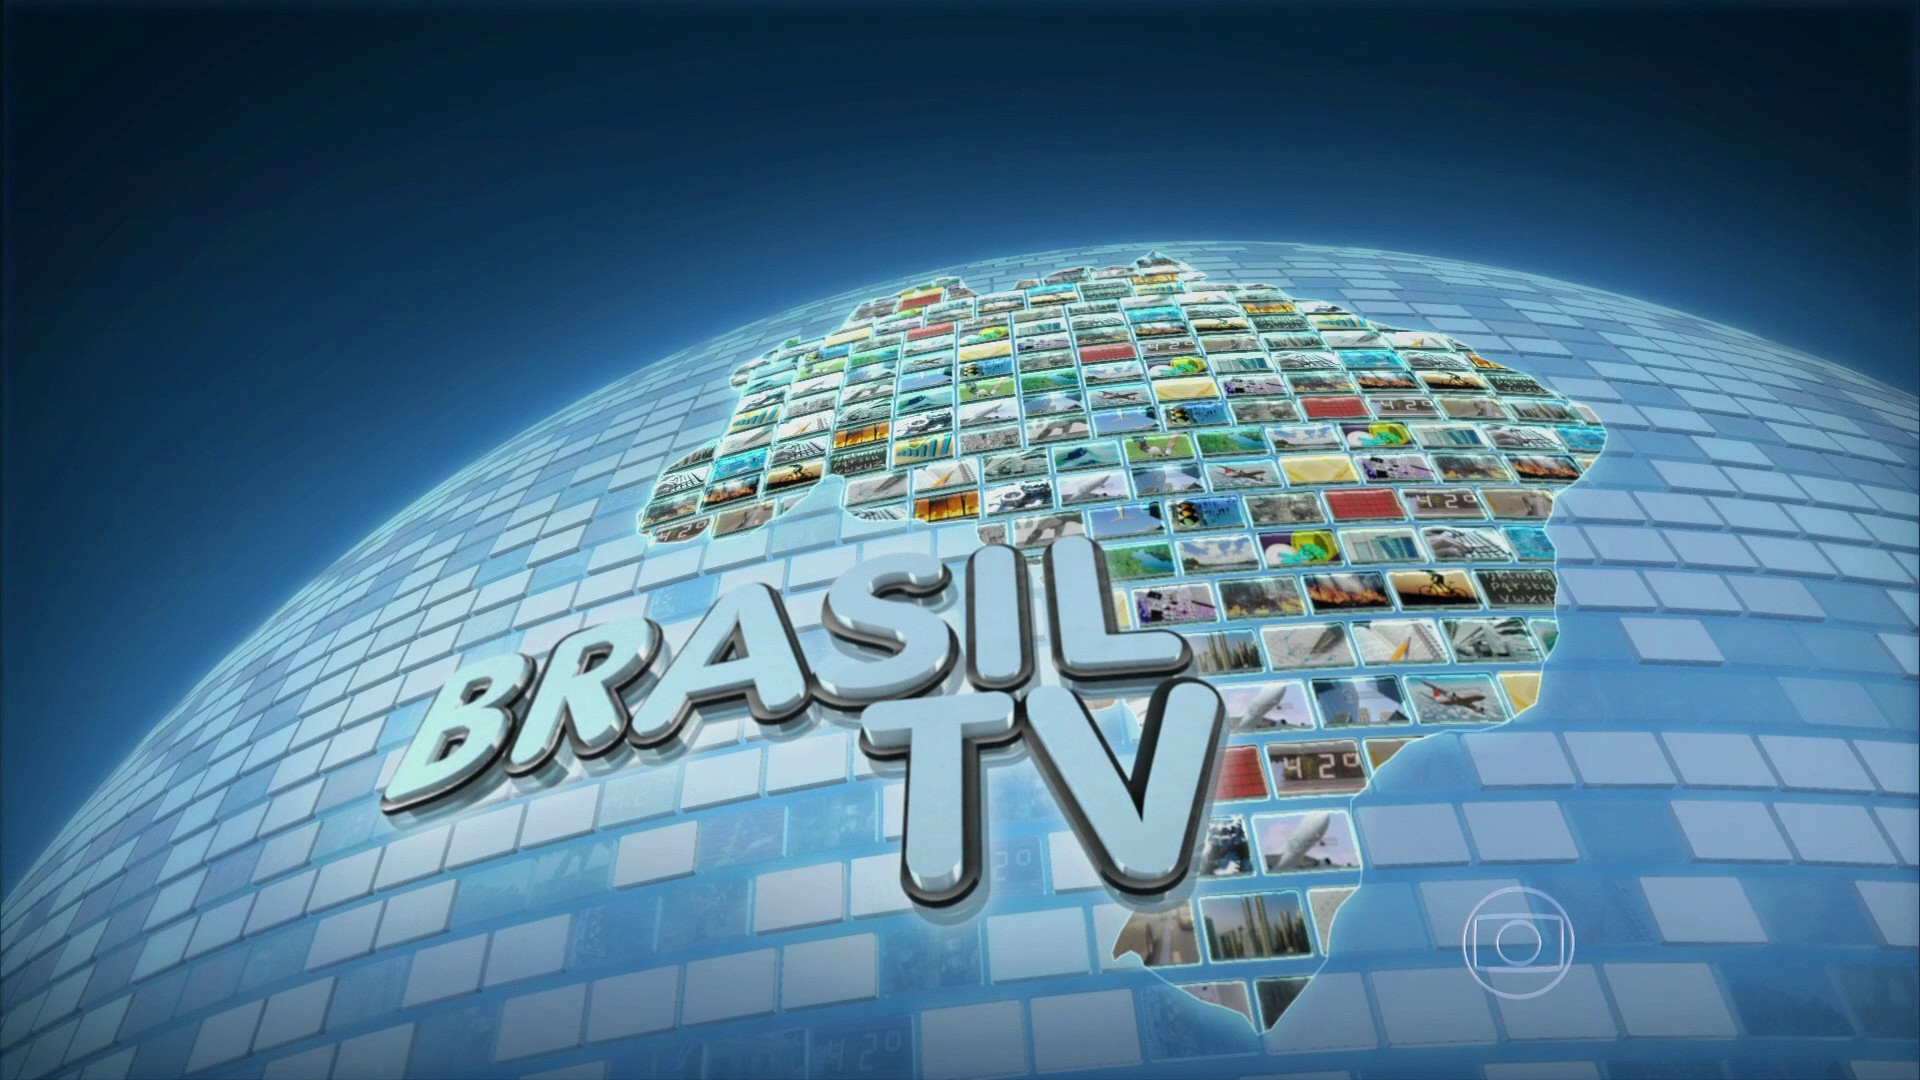 GloboNews Mais, TVPedia Brasil